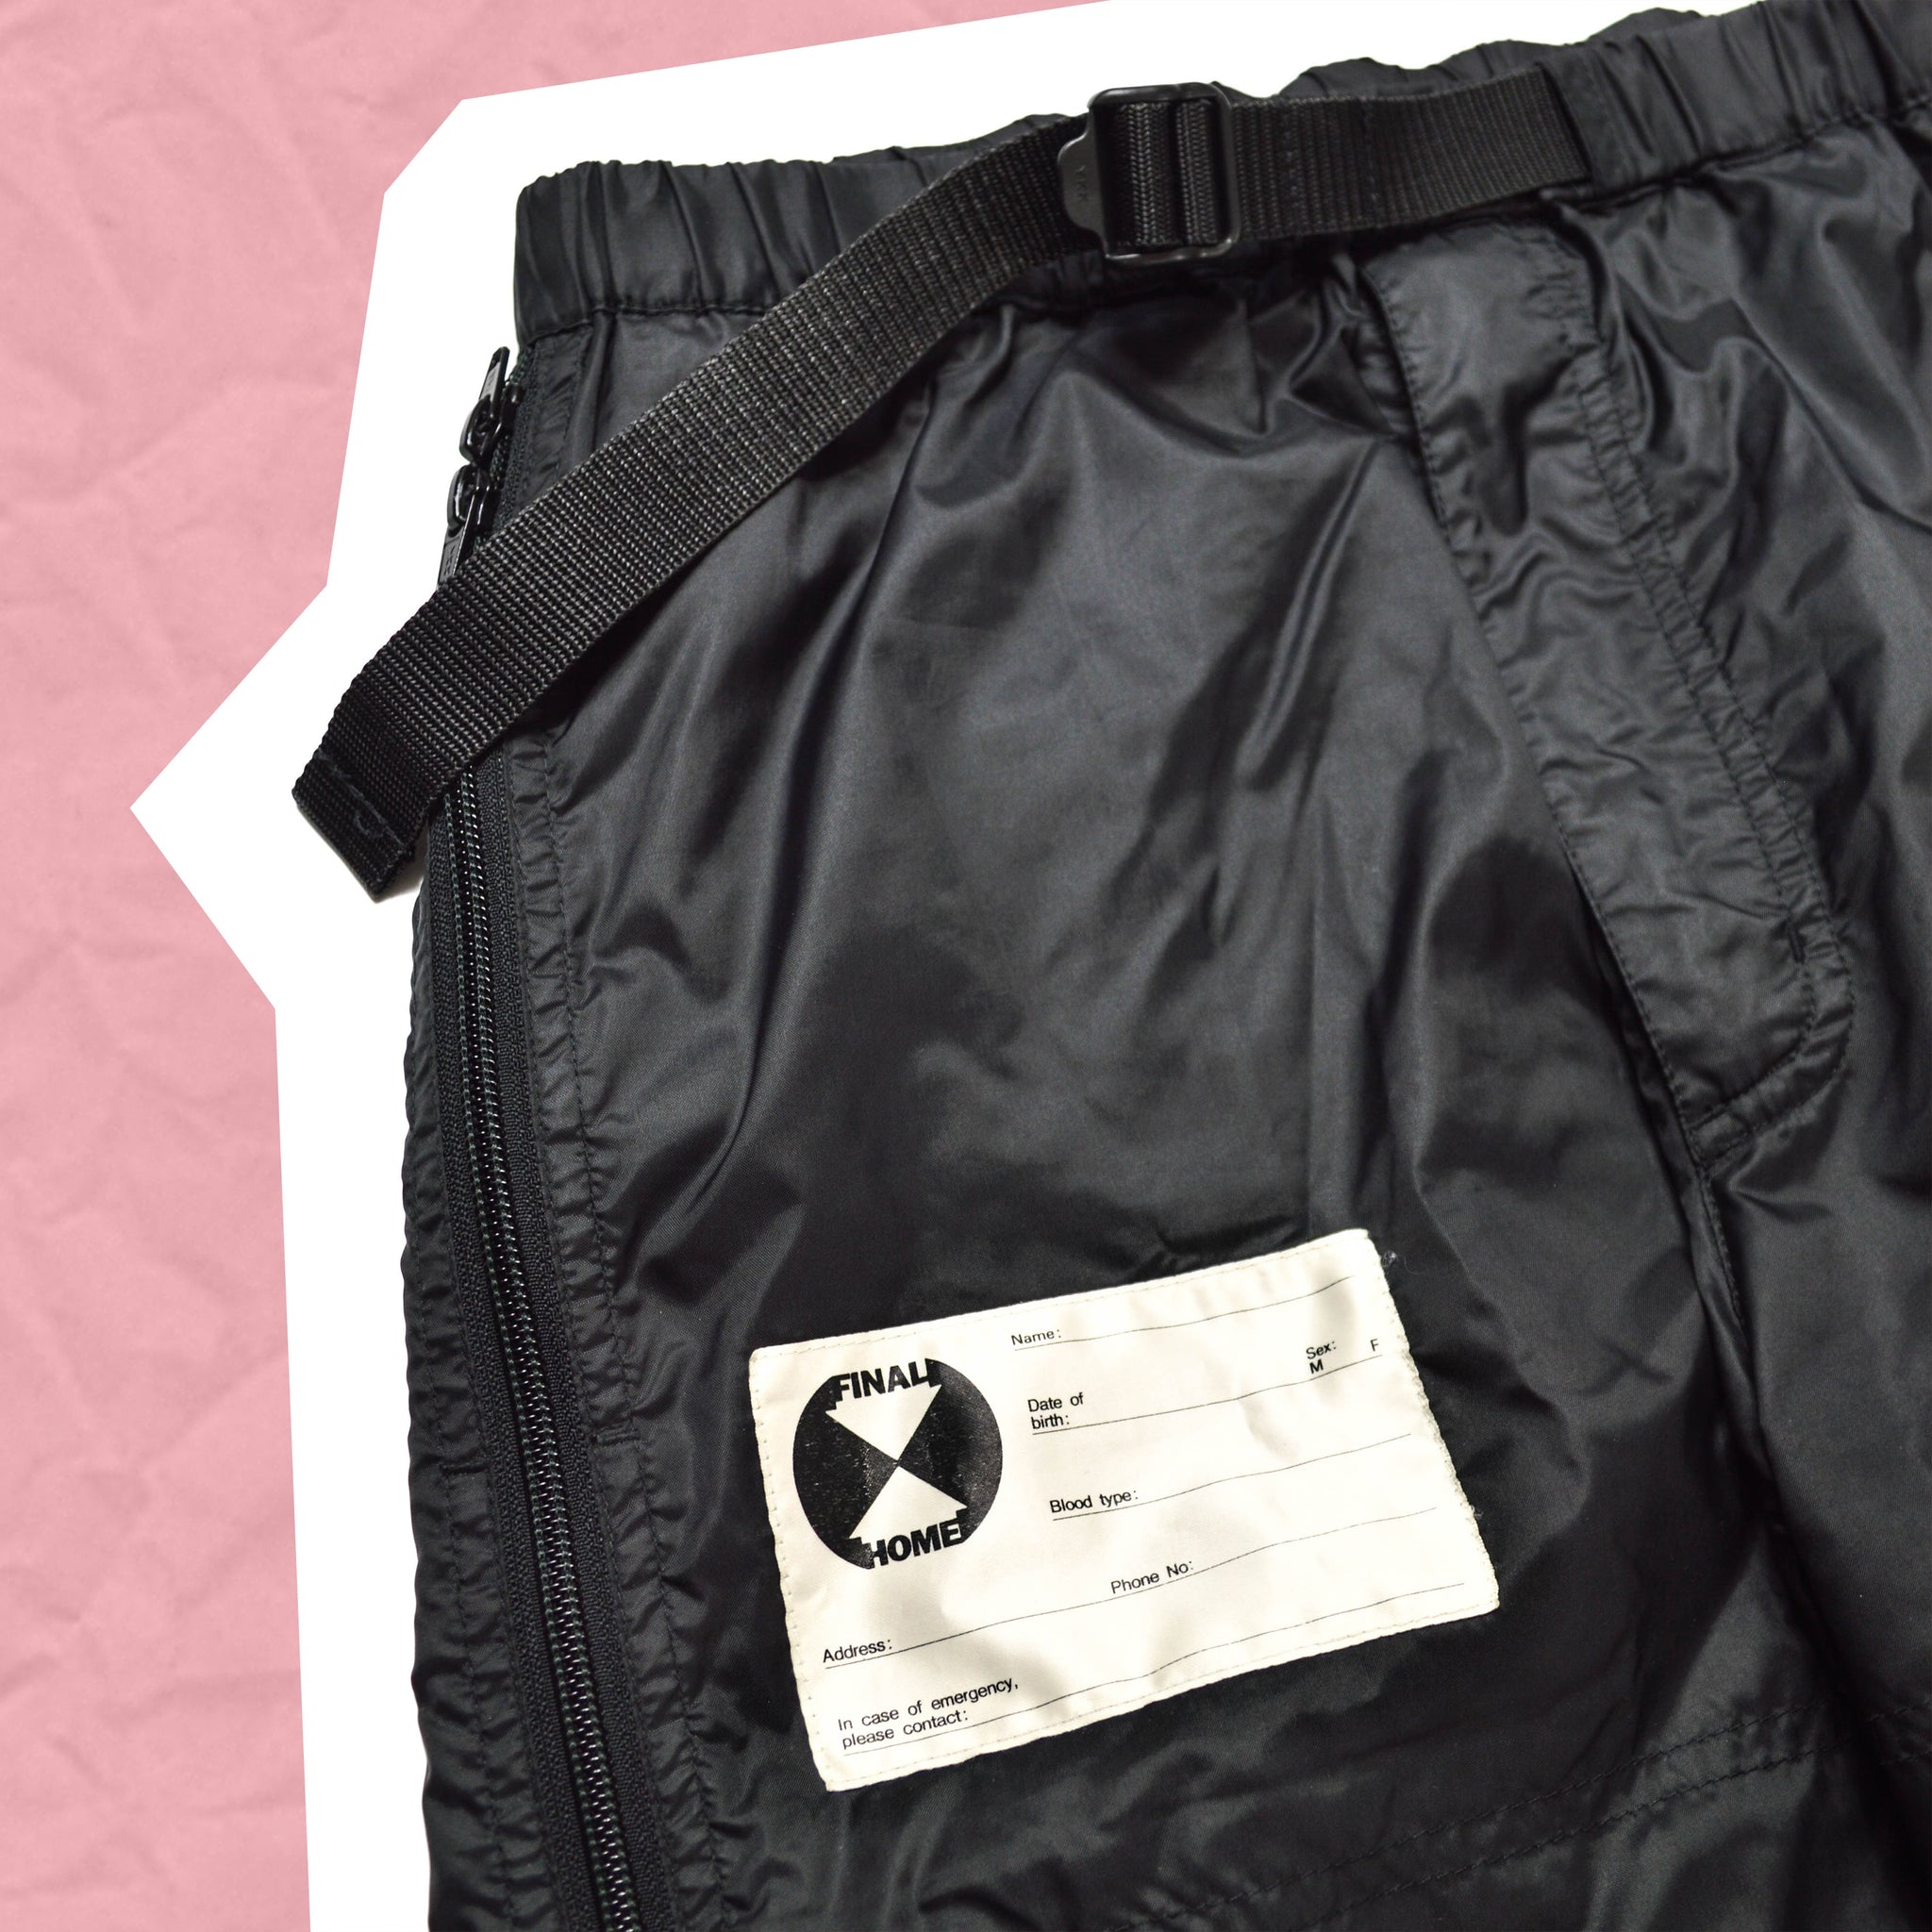 Final Home Survival Nylon Zipper Track Pants (S) – shop.allenreji